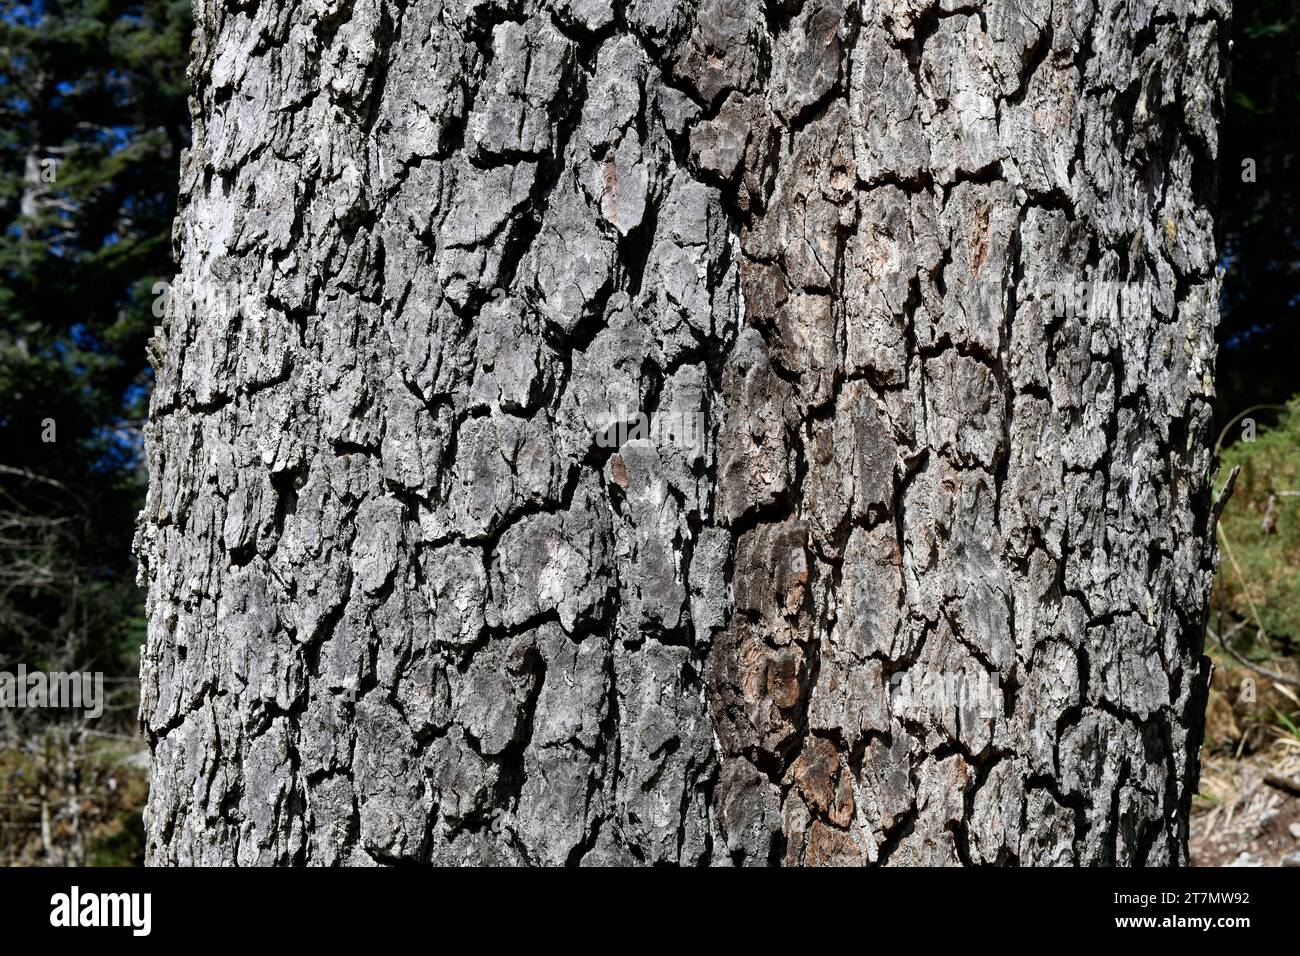 Spanish fir or pinsapo (Abies pinsapo) evergreen tree endemic to Mountains of Cadiz and Malaga. Trunk detail. This photo was taken in Los Lajares, Sie Stock Photo